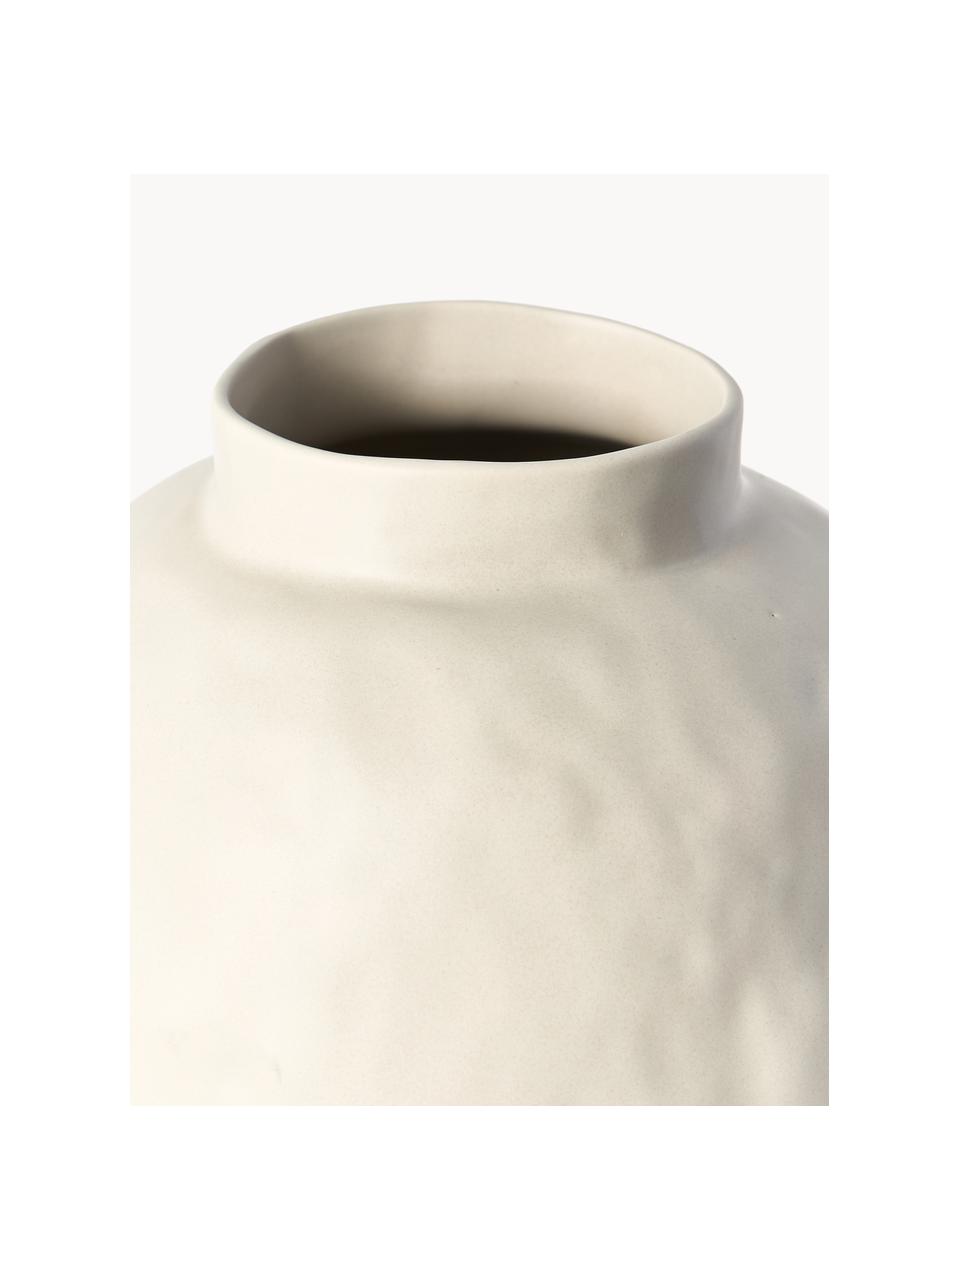 Vaso di design in ceramica fatto a mano Saki, alt. 40 cm, Ceramica, Beige chiaro opaco, Ø 32 x Alt. 40 cm